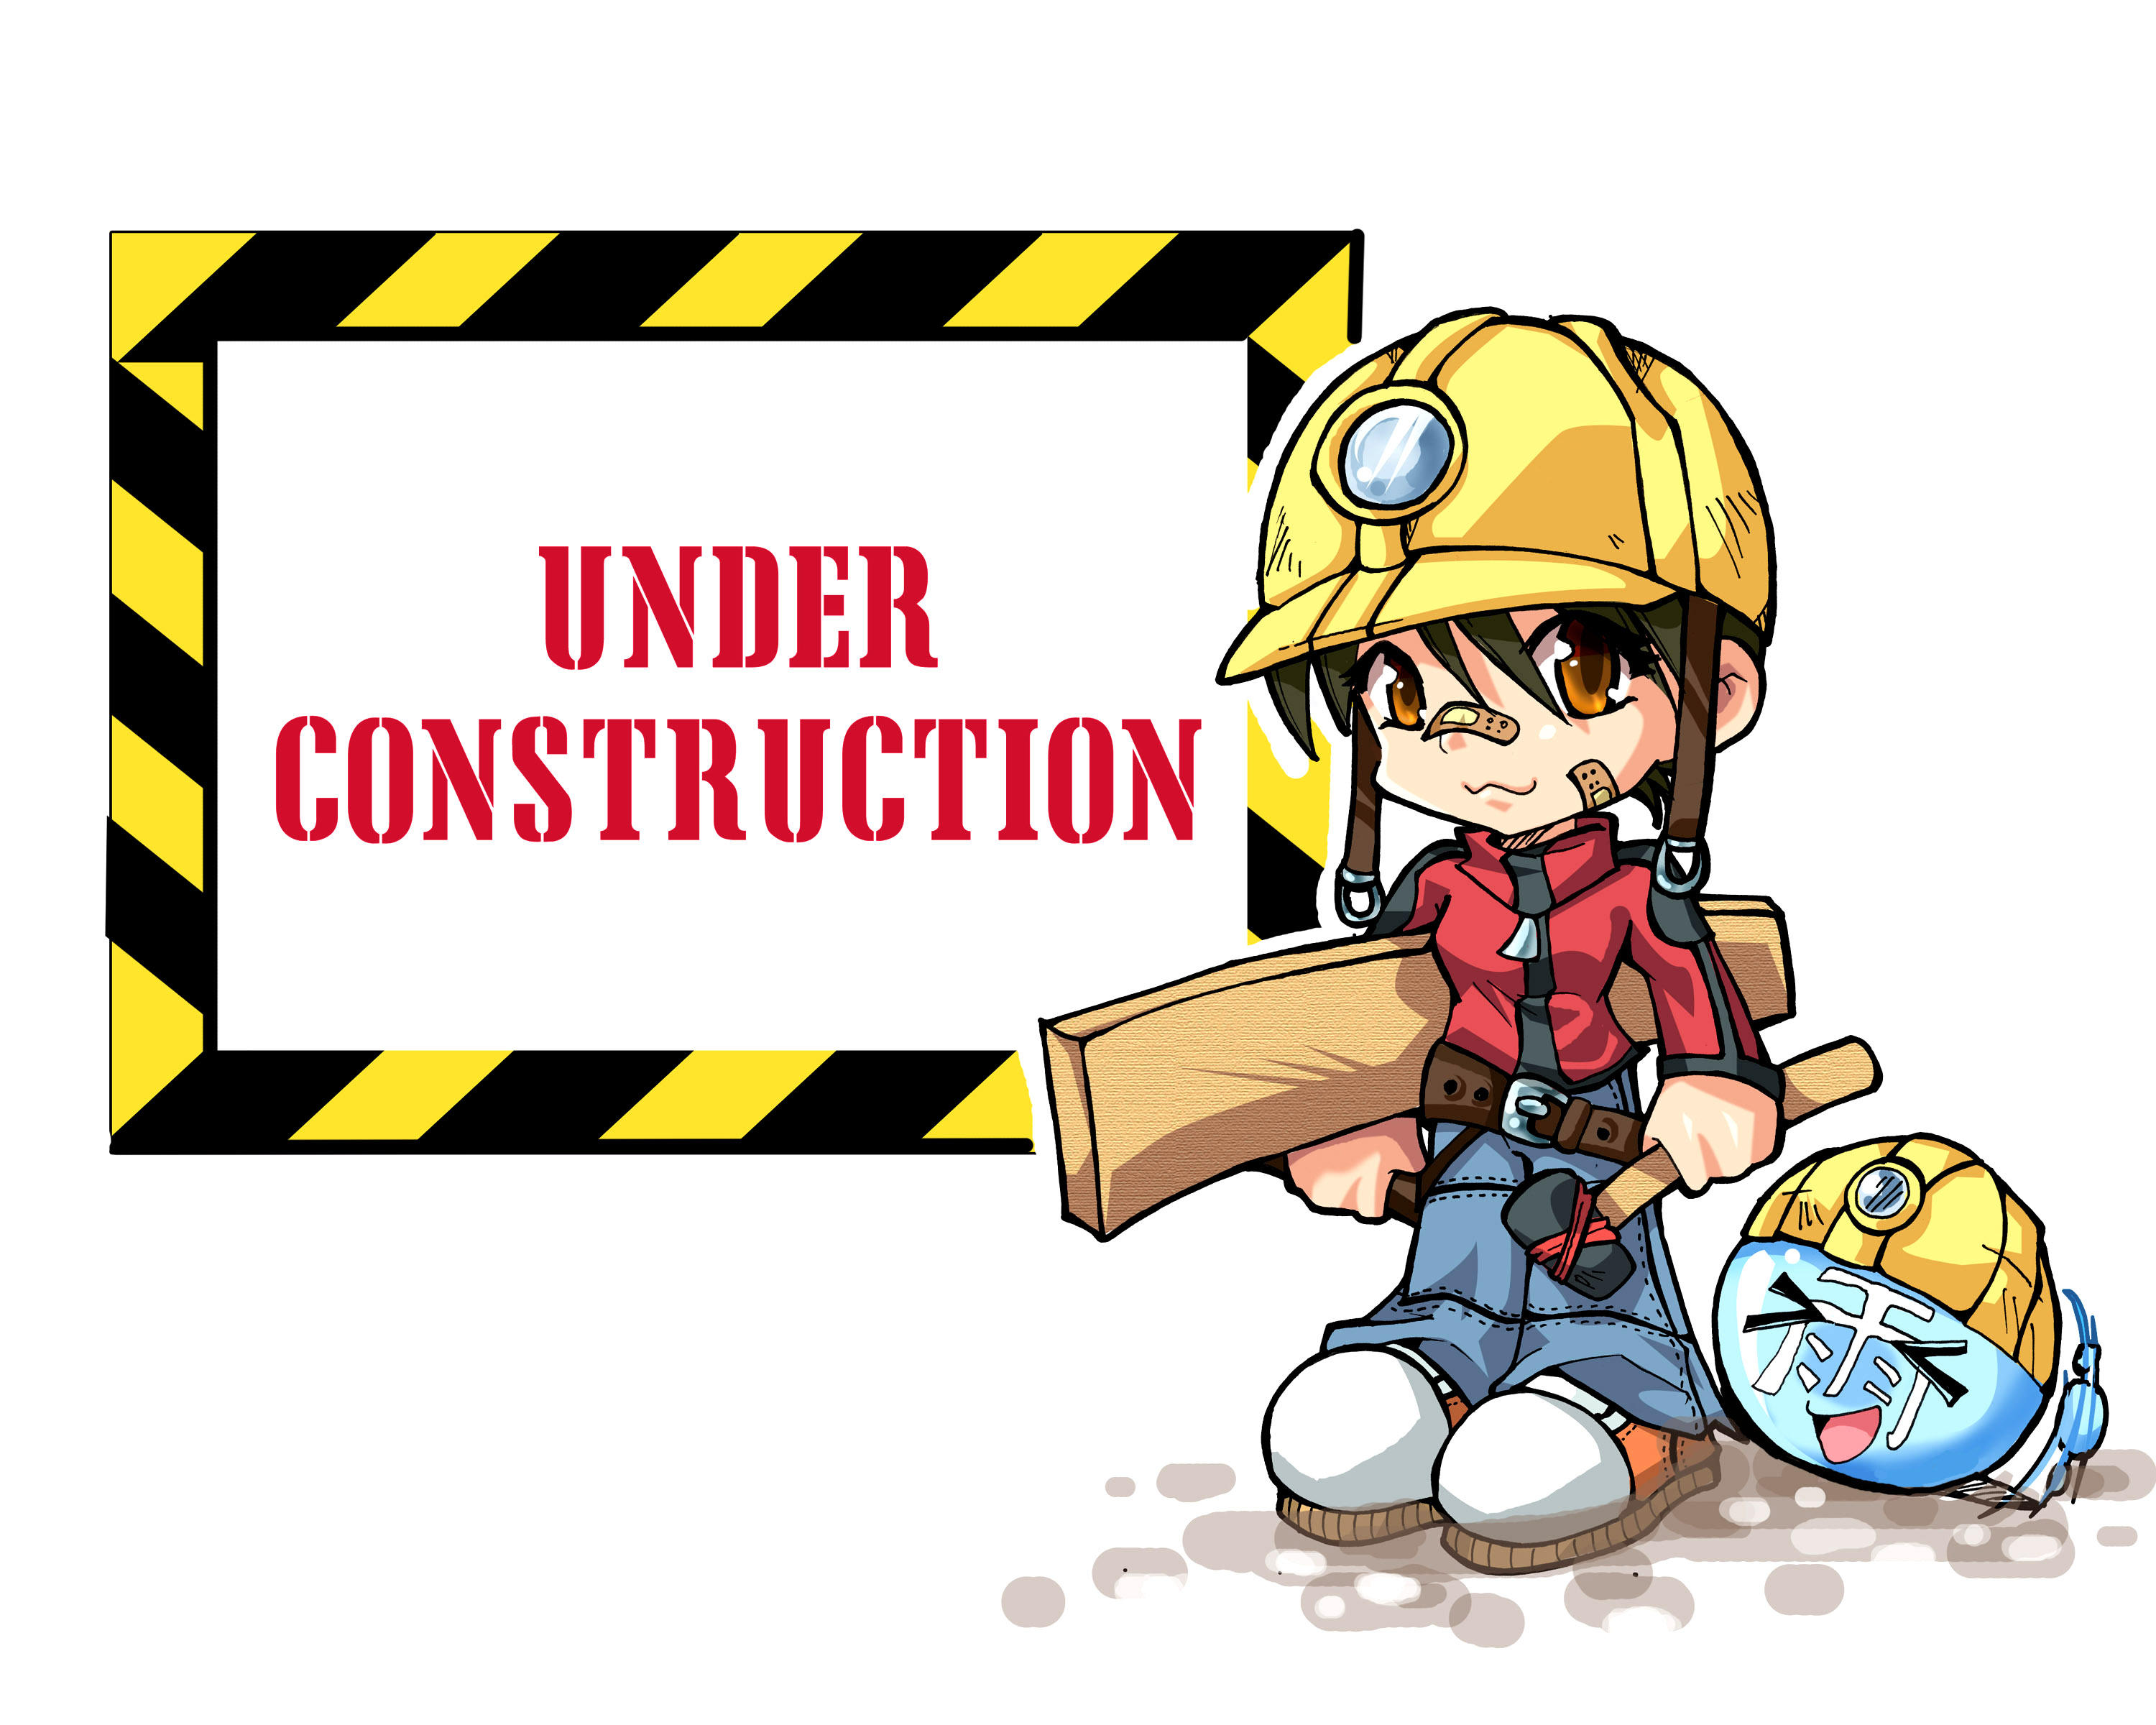 website under construction clipart - photo #14